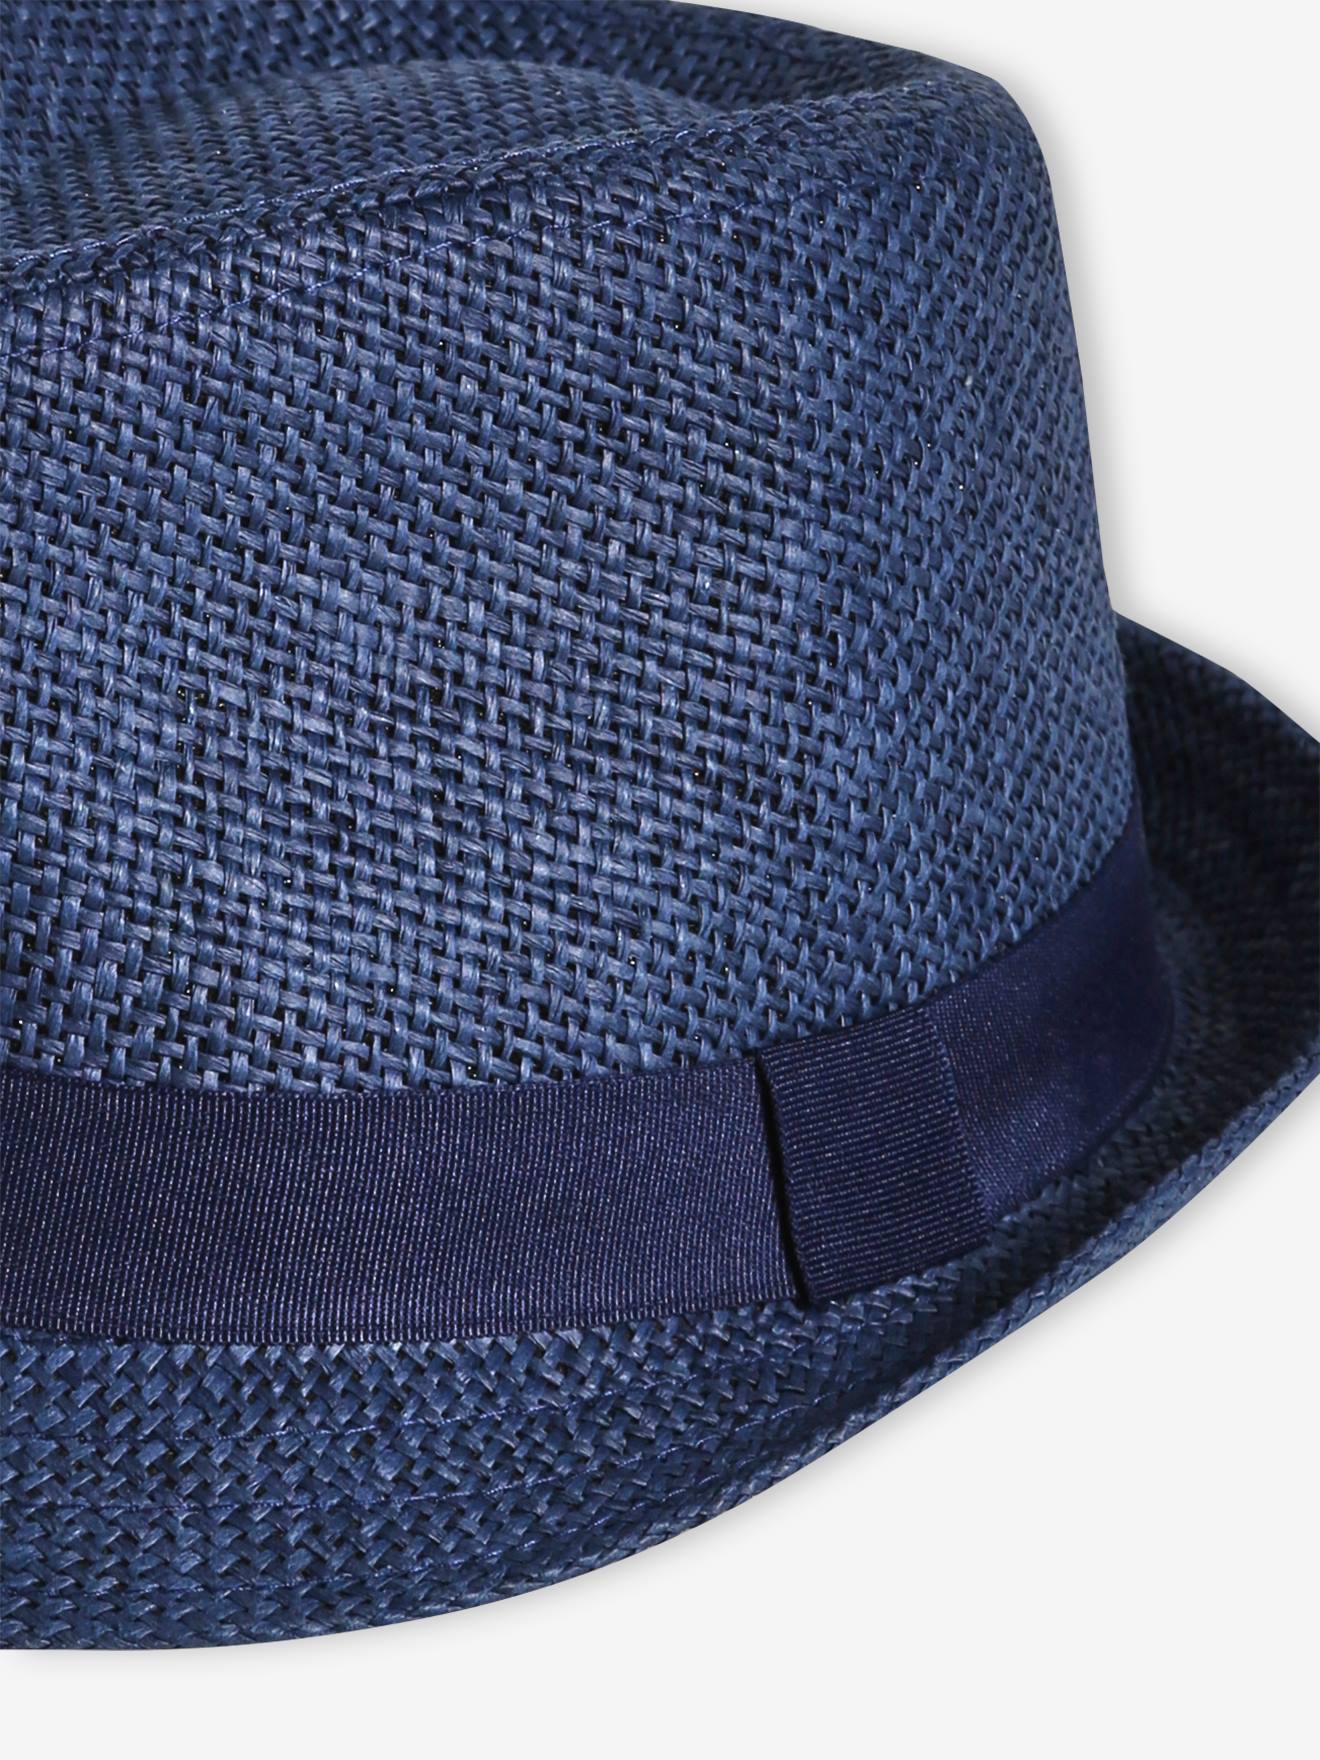 Sombrero panamá aspecto paja, para niño azul - Vertbaudet